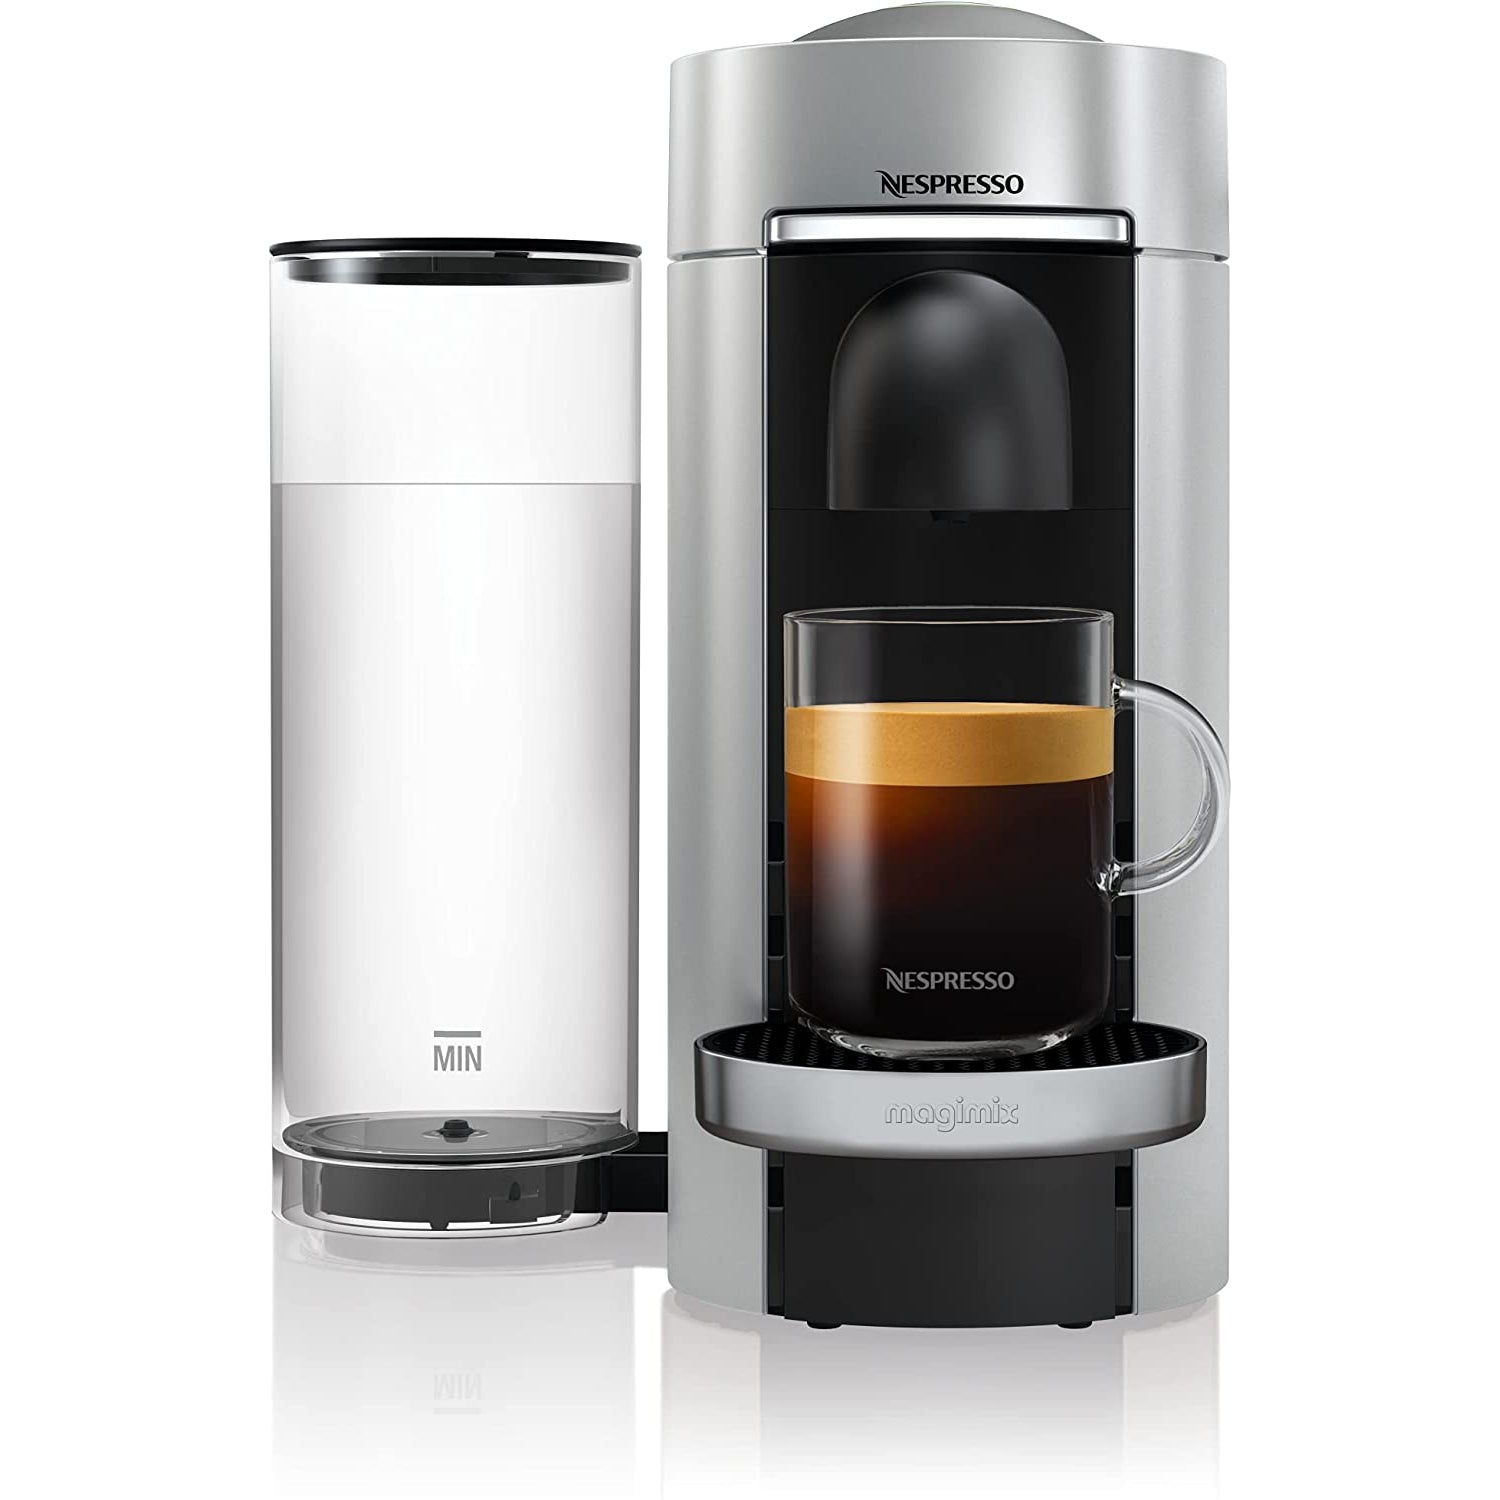 Nespresso Vertuo Plus 11386 Coffee Machine by Magimix, Silver